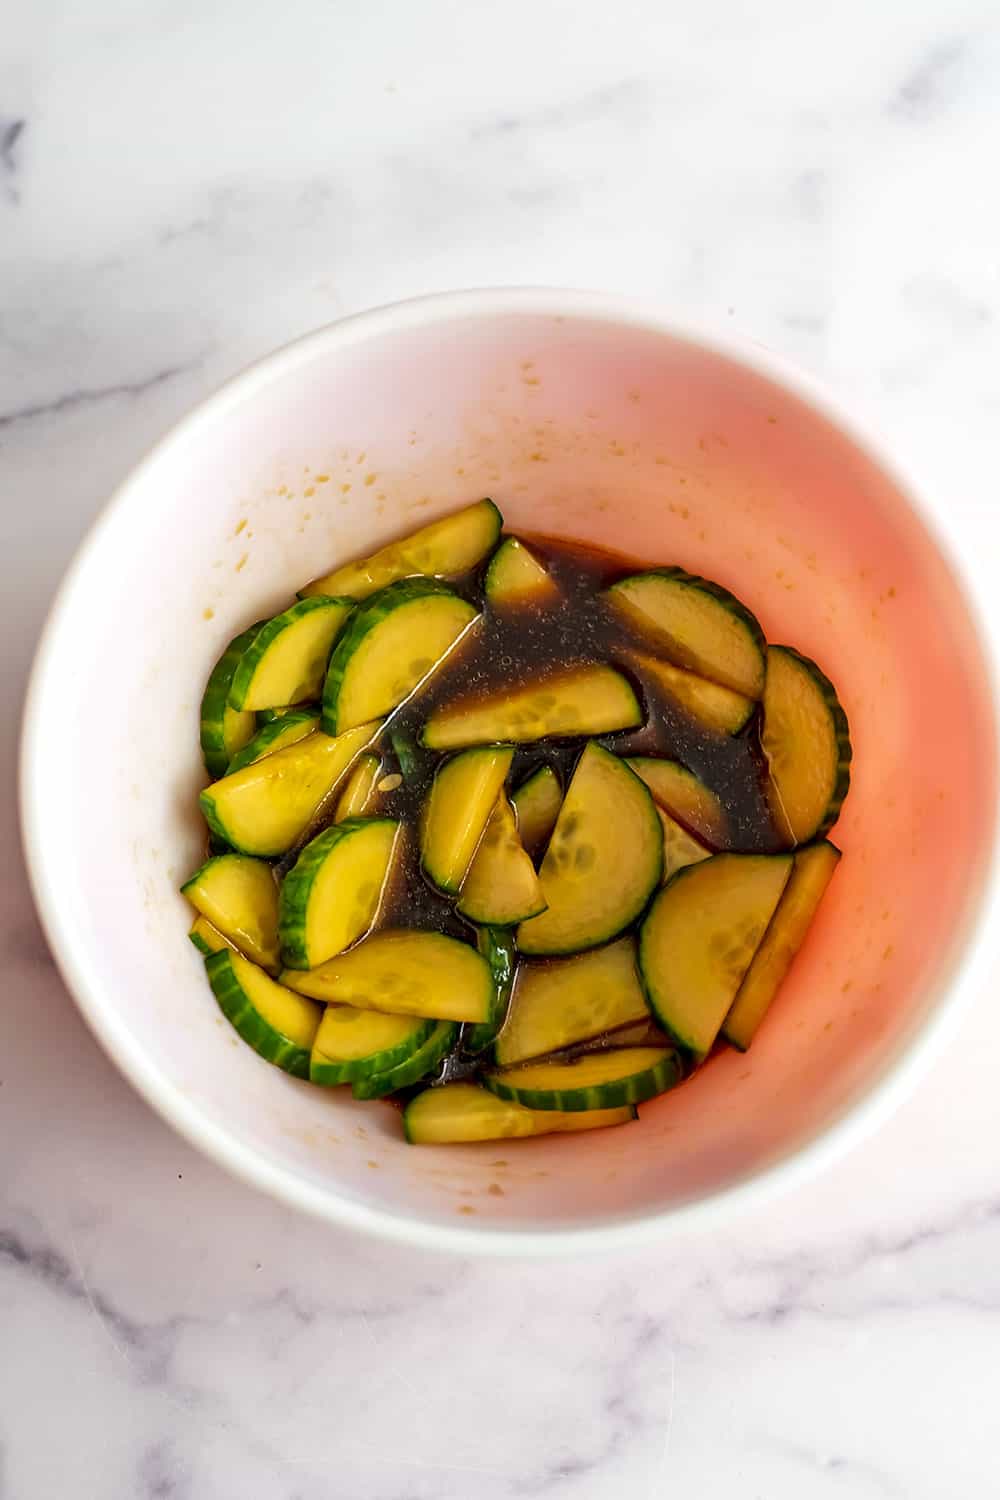 Marinated cucumbers in a bowl.